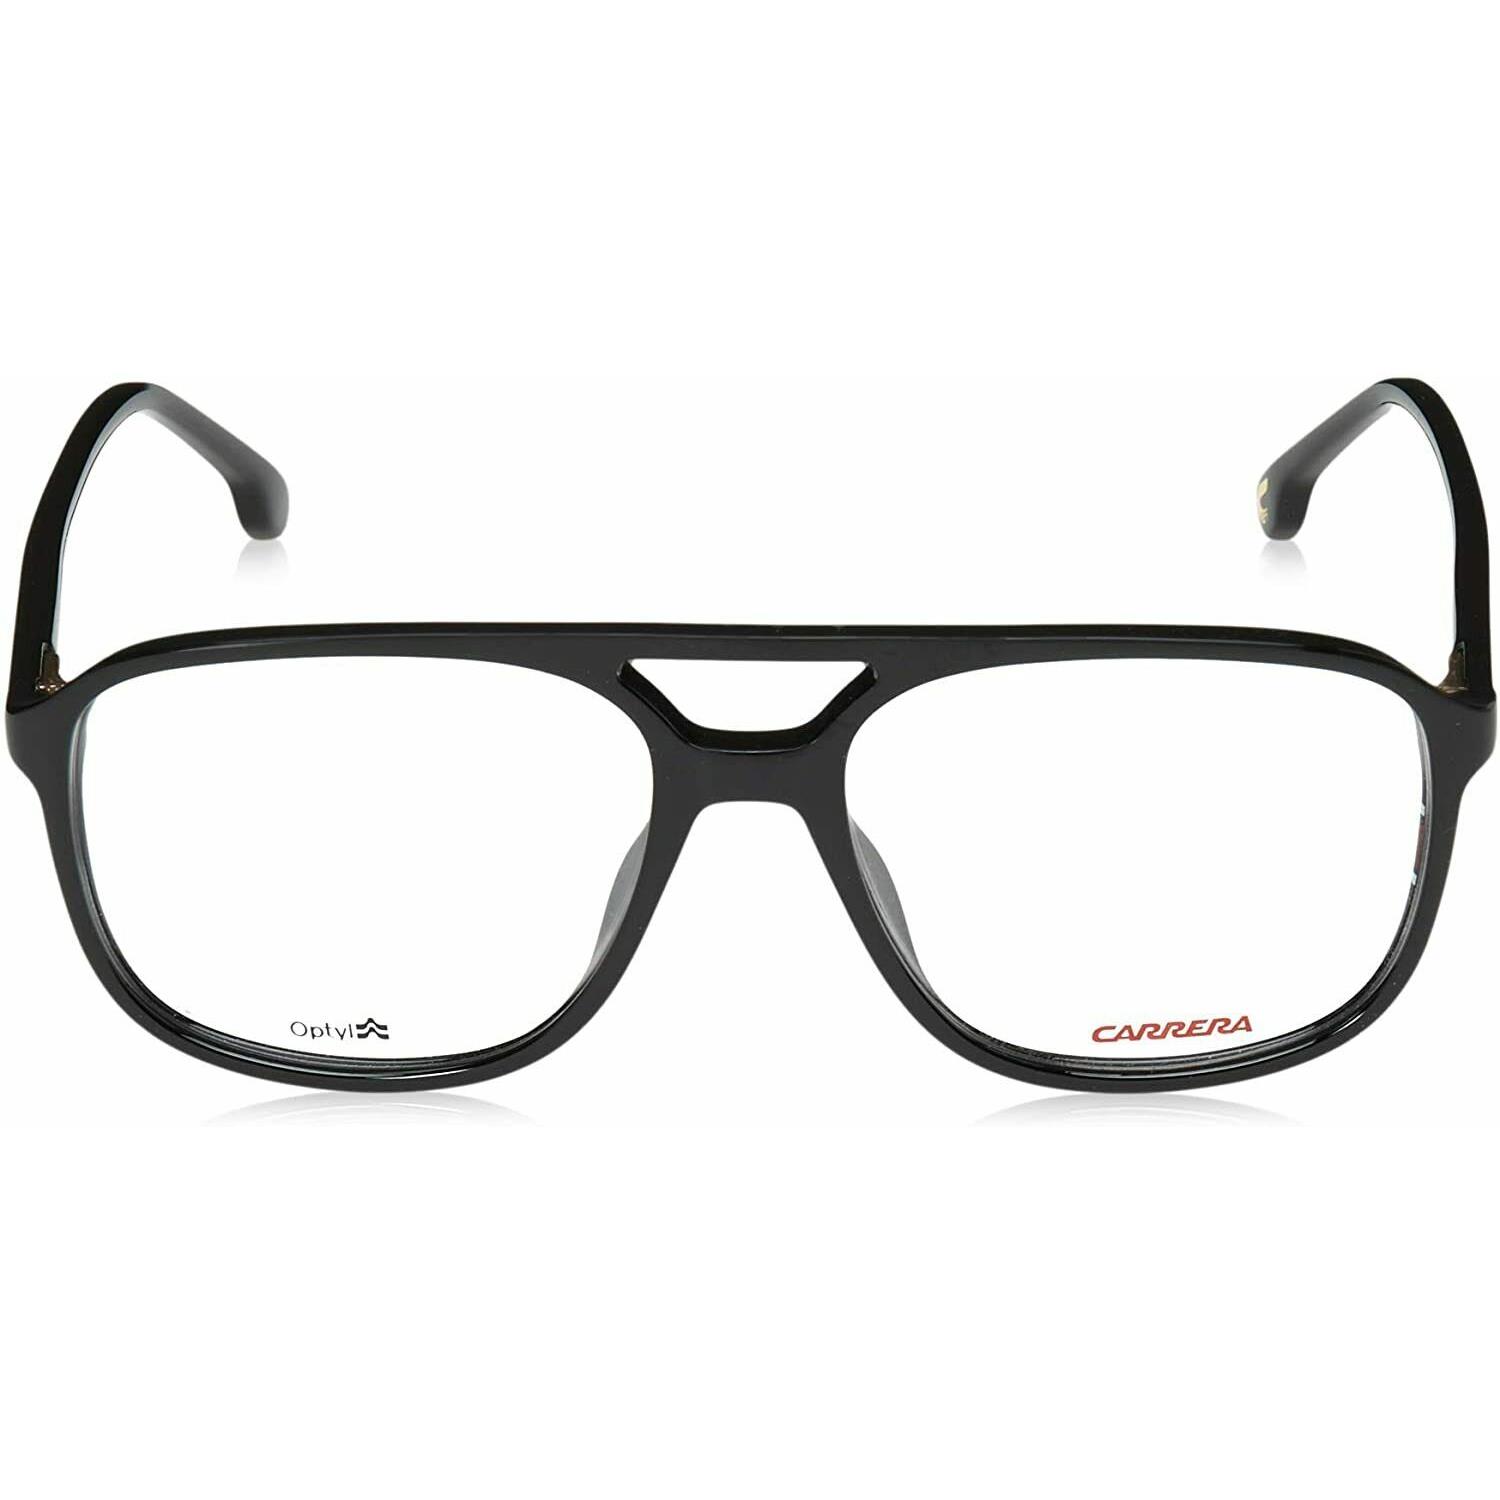 Carrera 176 0807 807 Eyeglasses Black Demo Lens Men`s Optical Frame ...